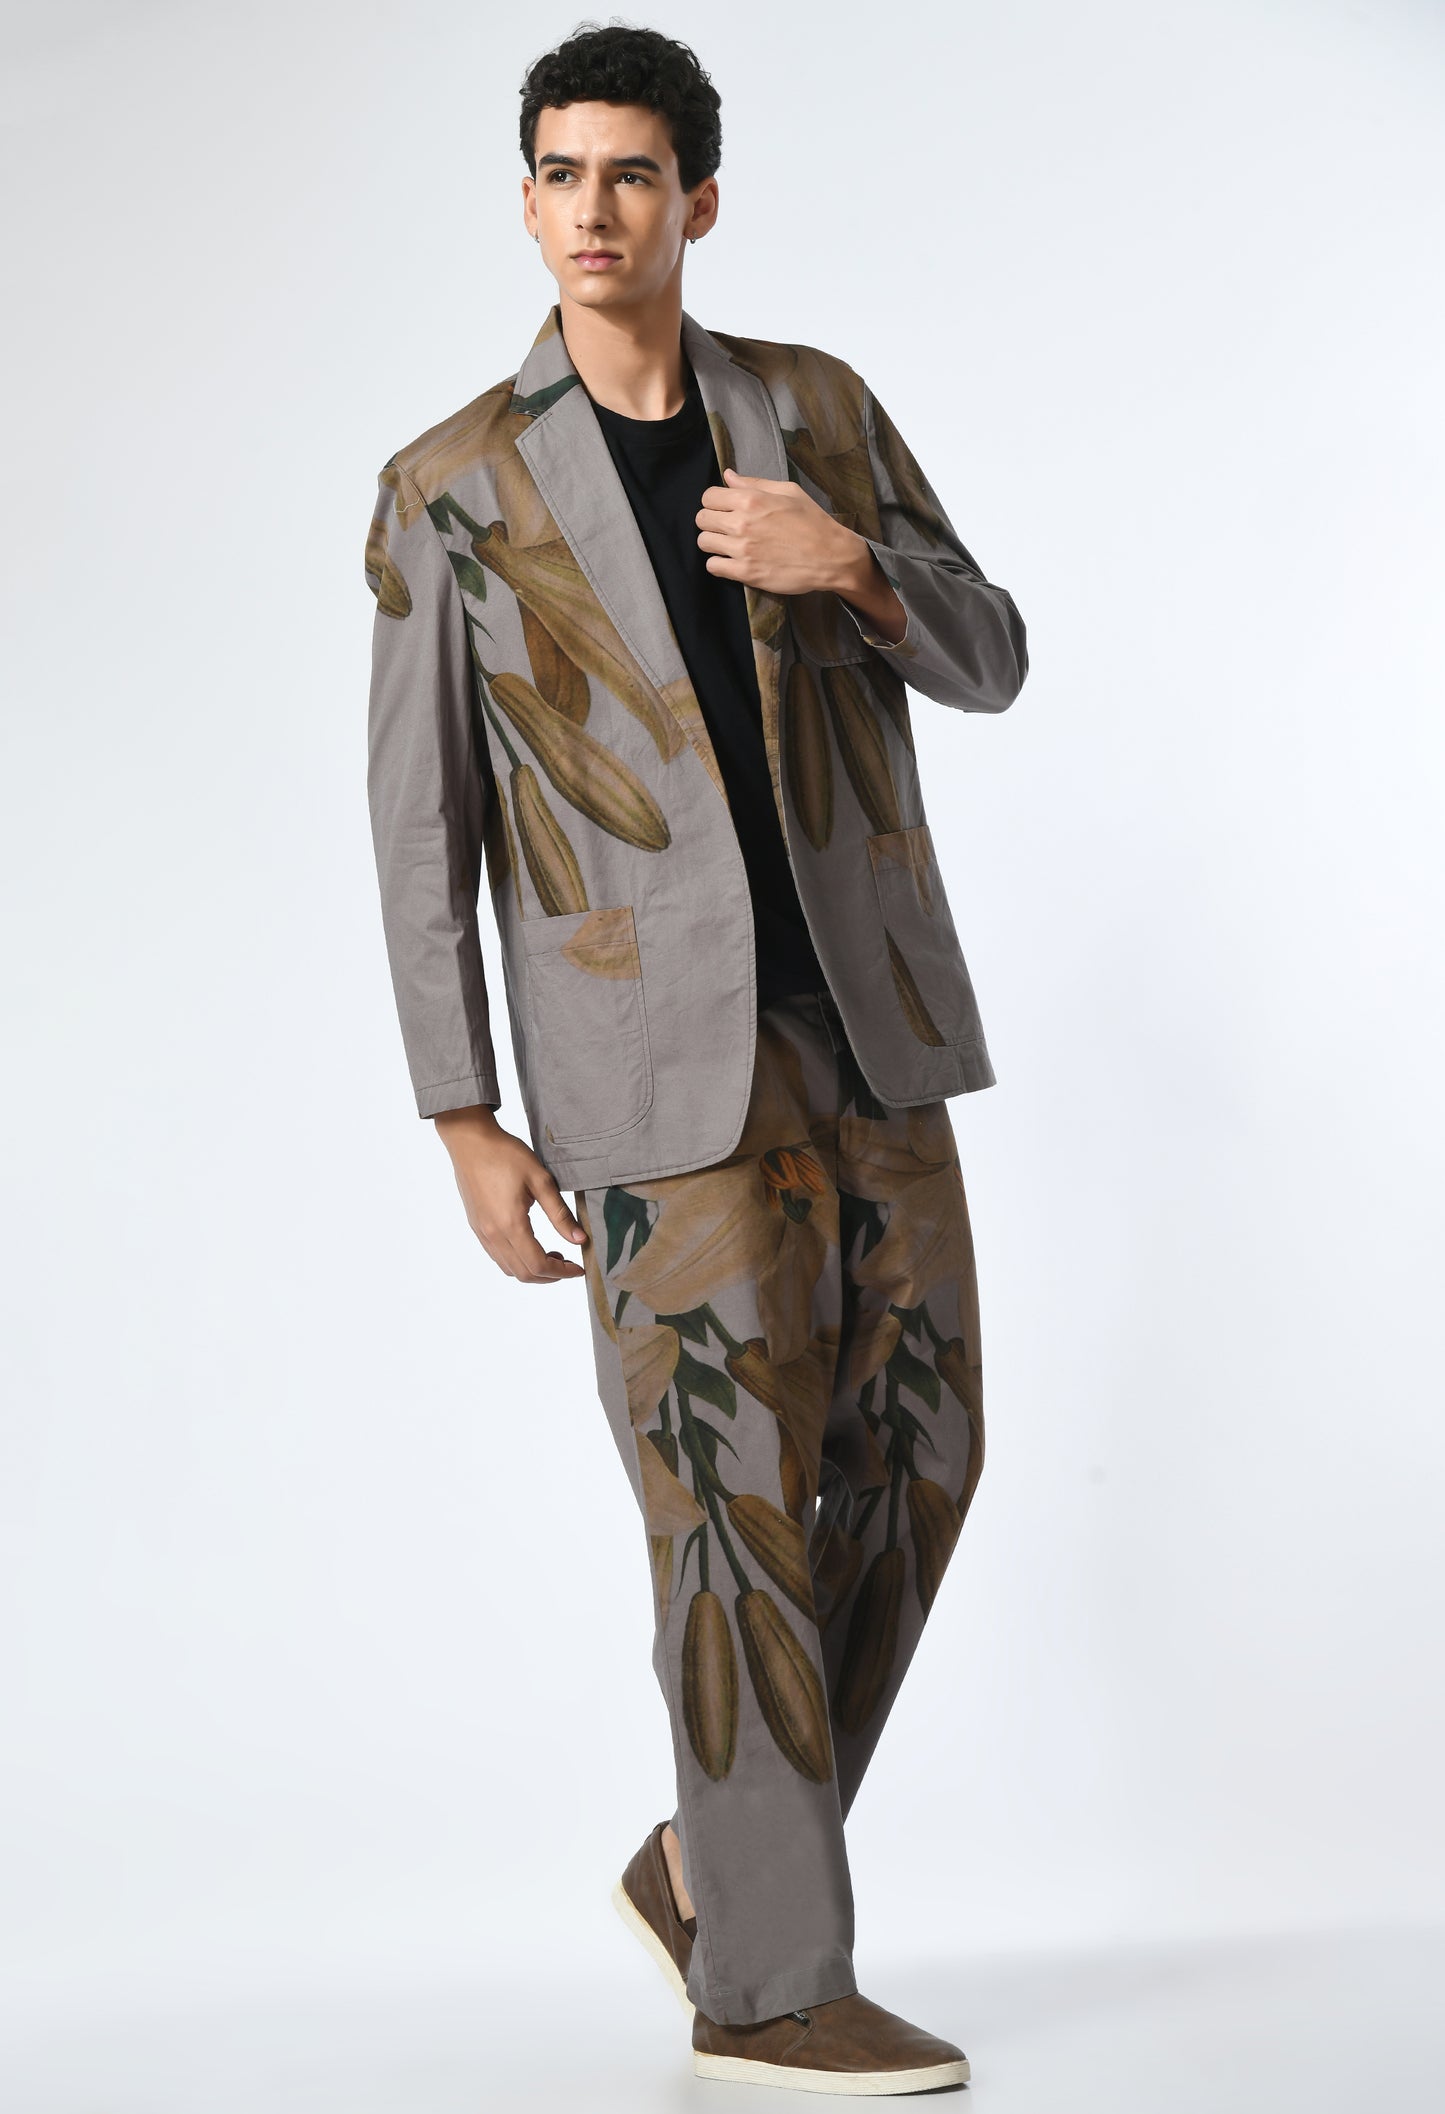 Men's blazer set featuring a striking print of big flowers.